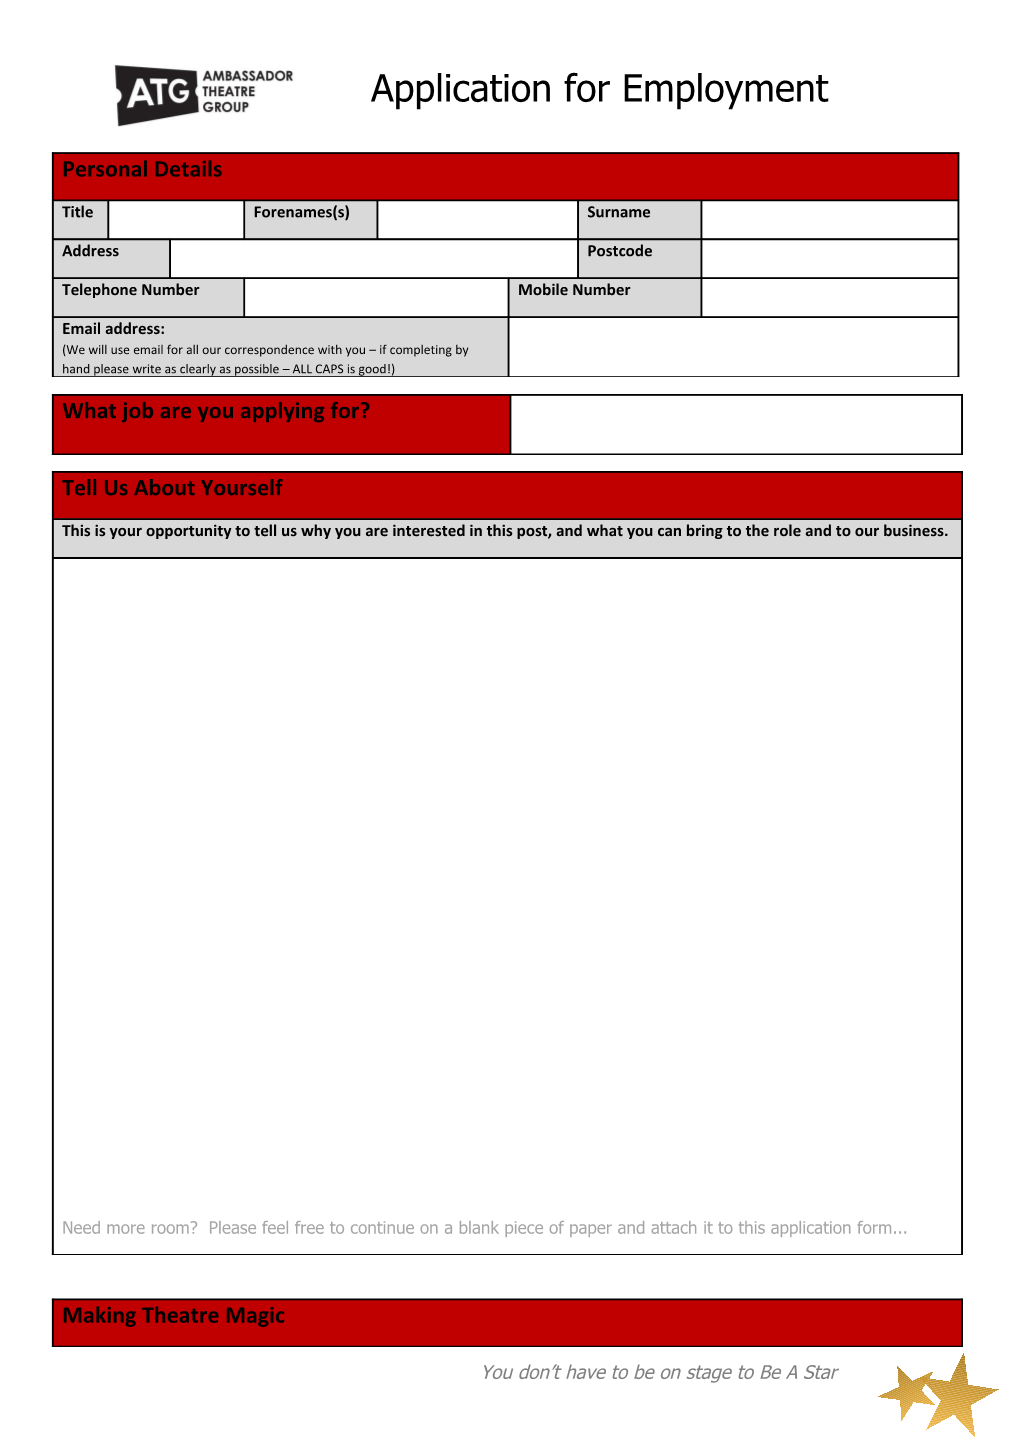 ATG Application Form